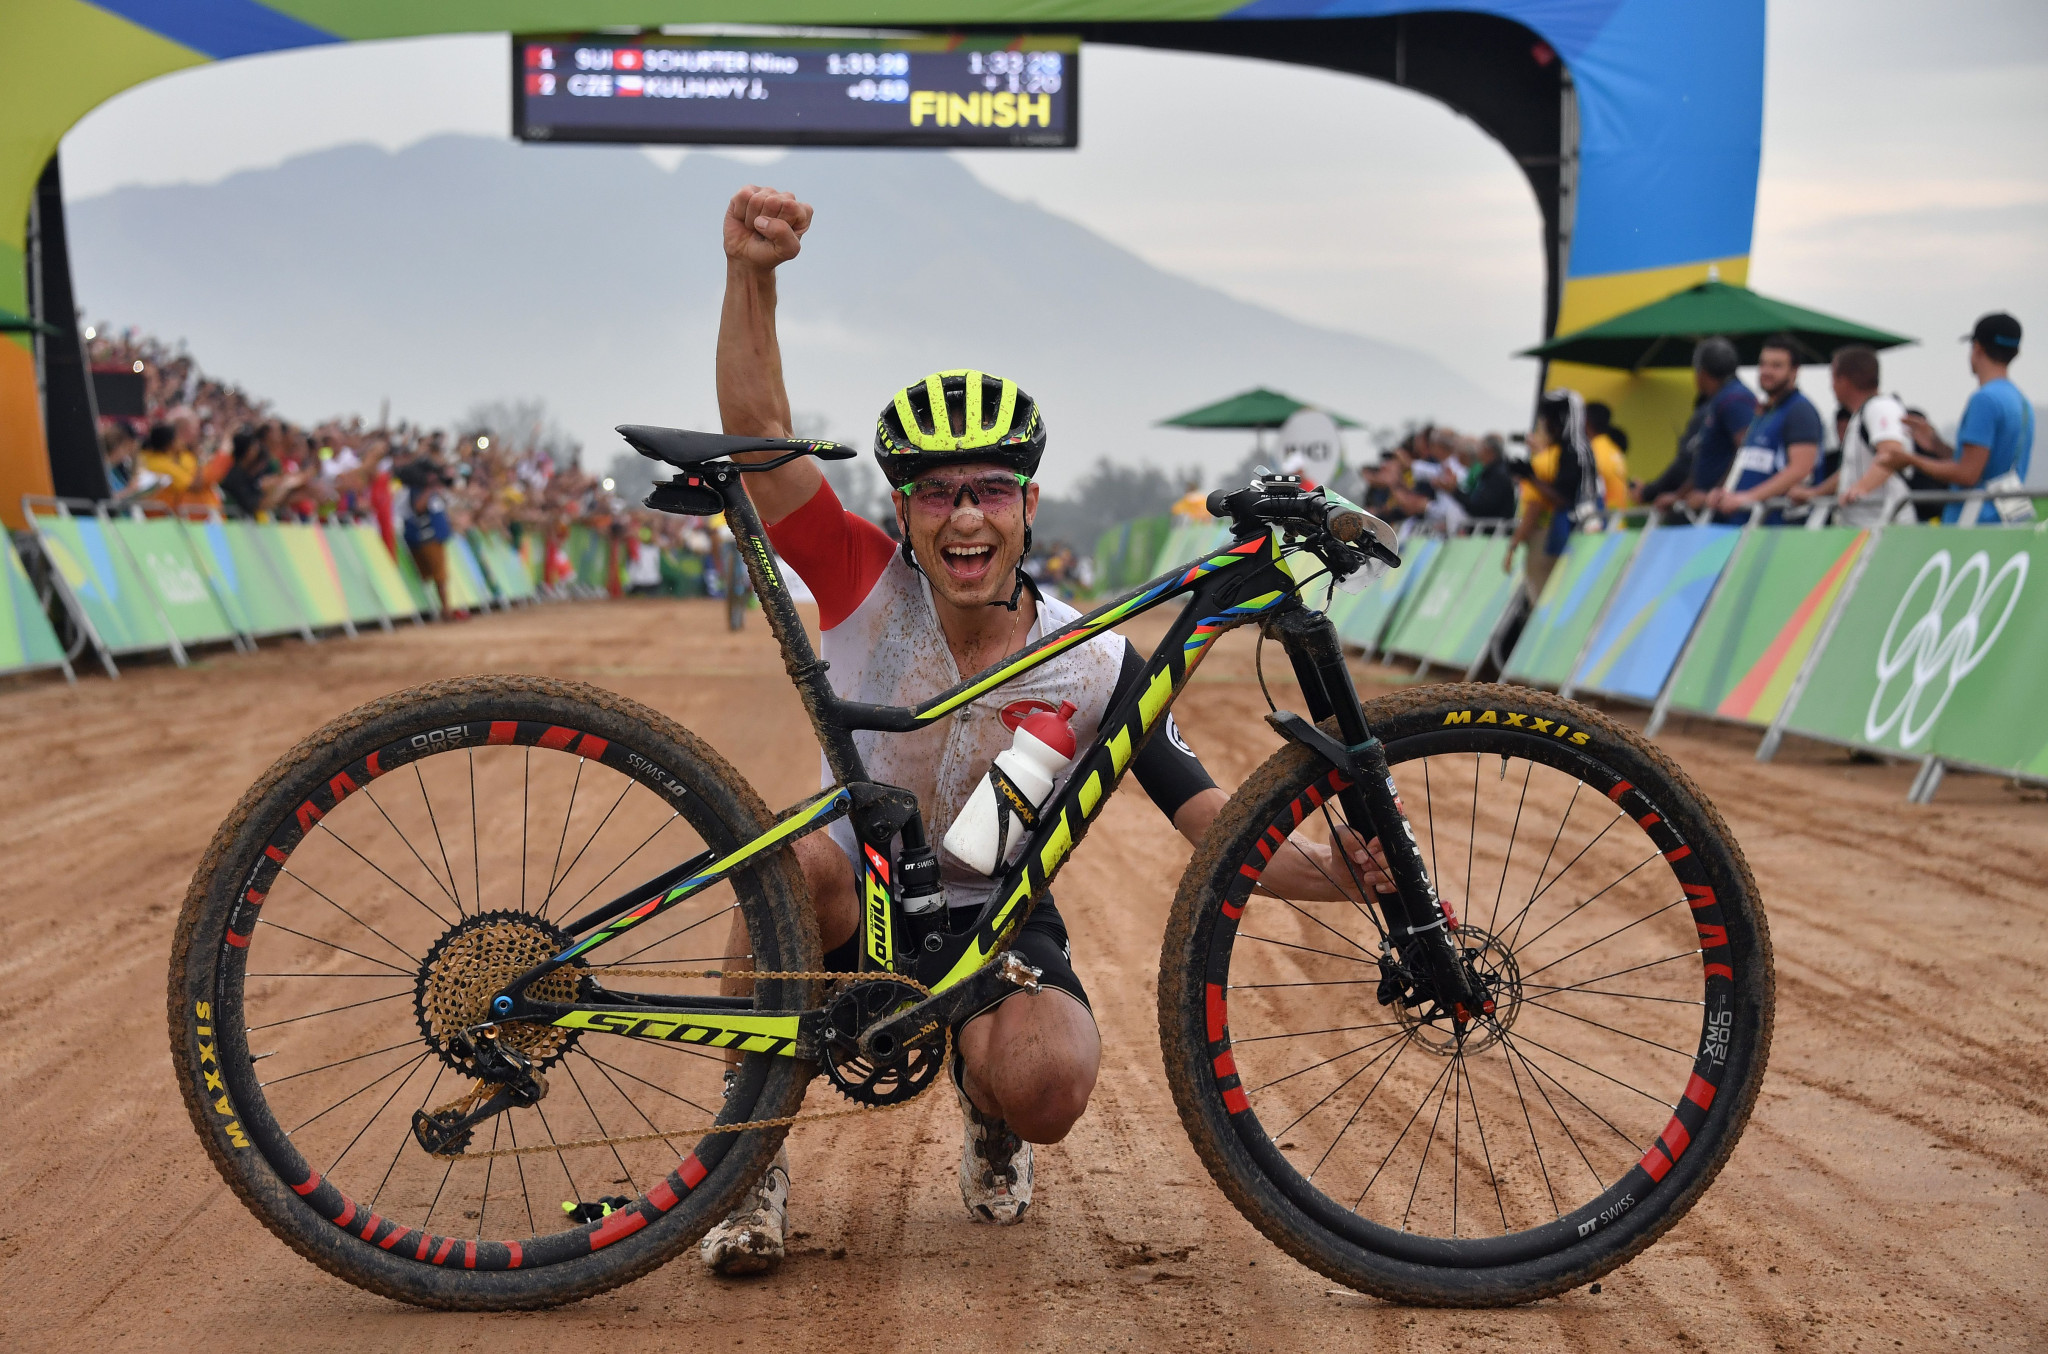 Schurter seeking to cap perfect season with UCI Mountain Bike World Championship success